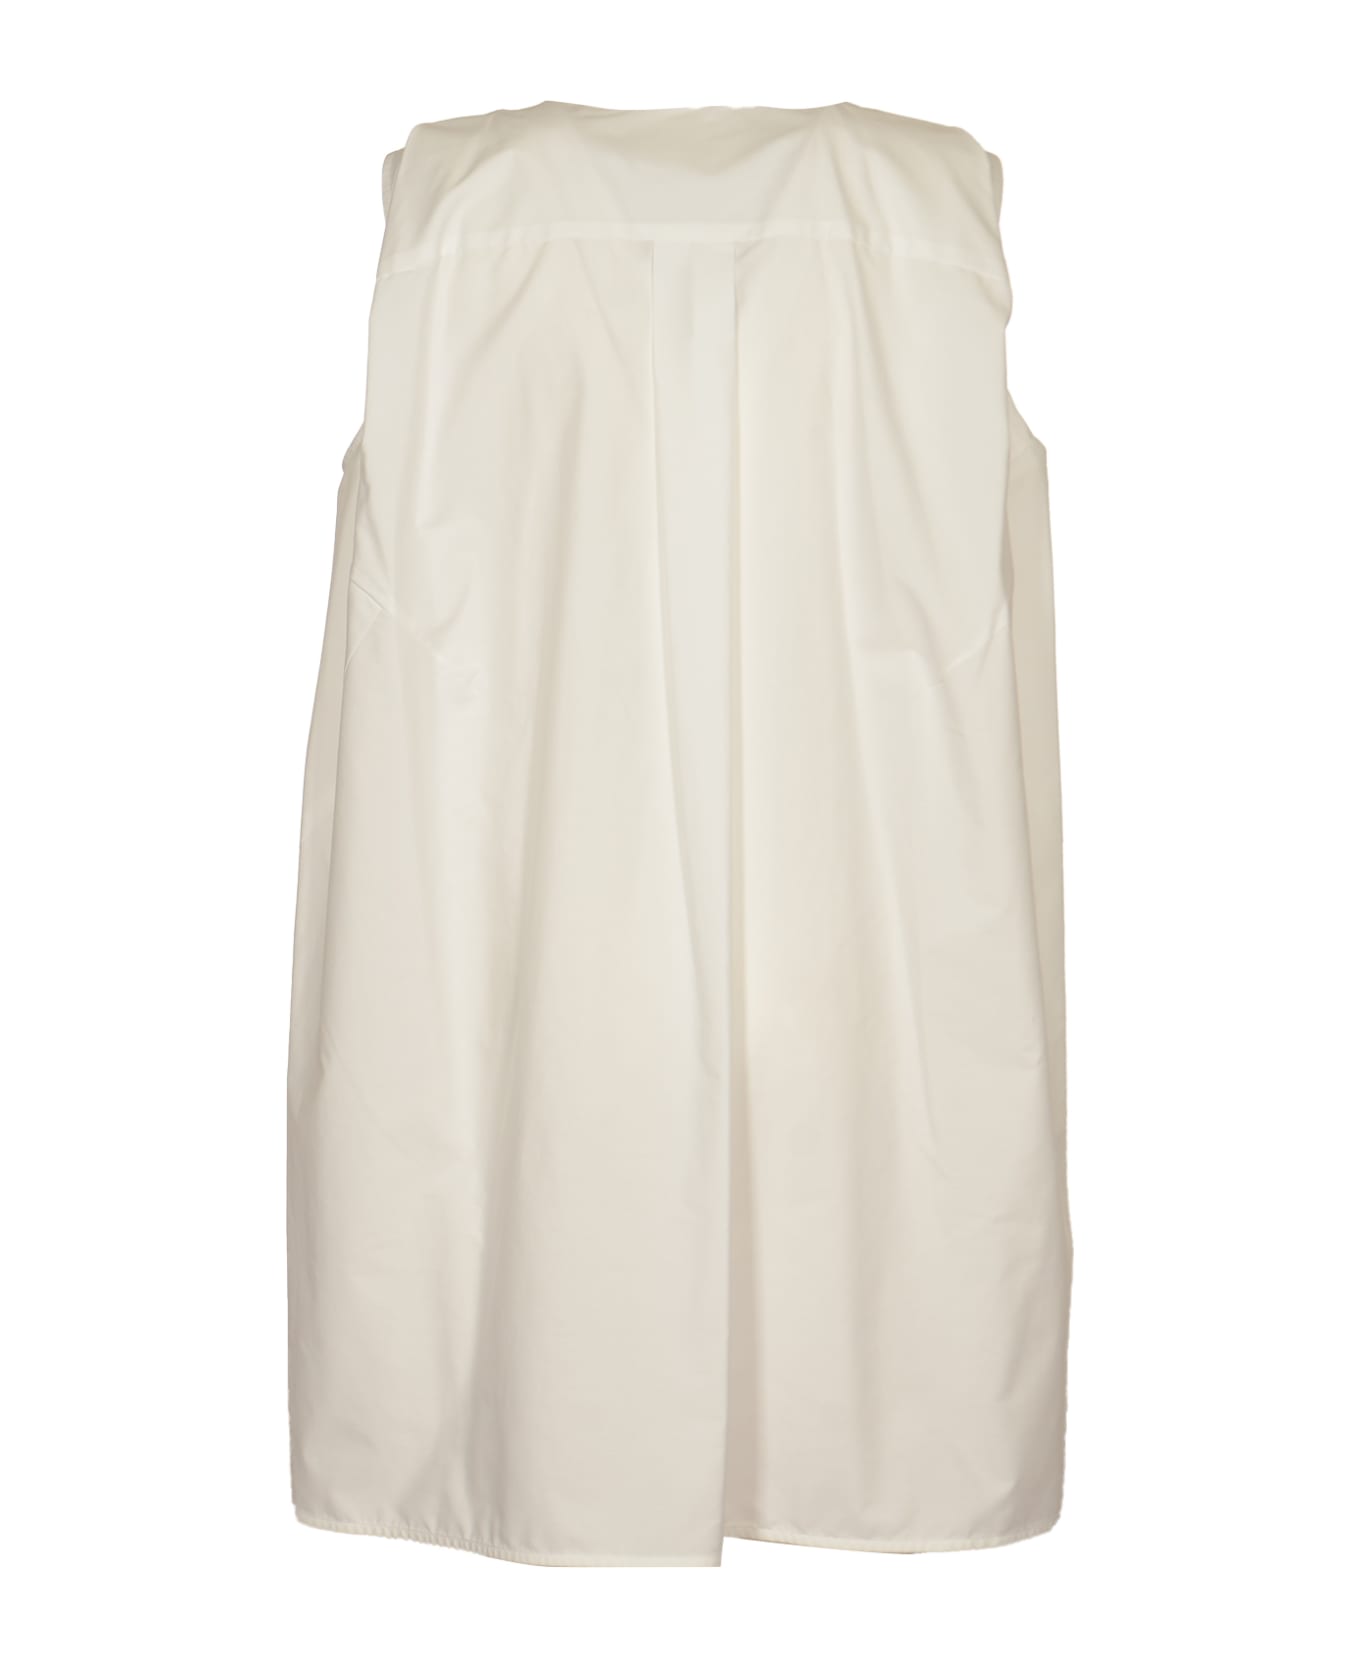 Sacai Sleeveless Shirt - White